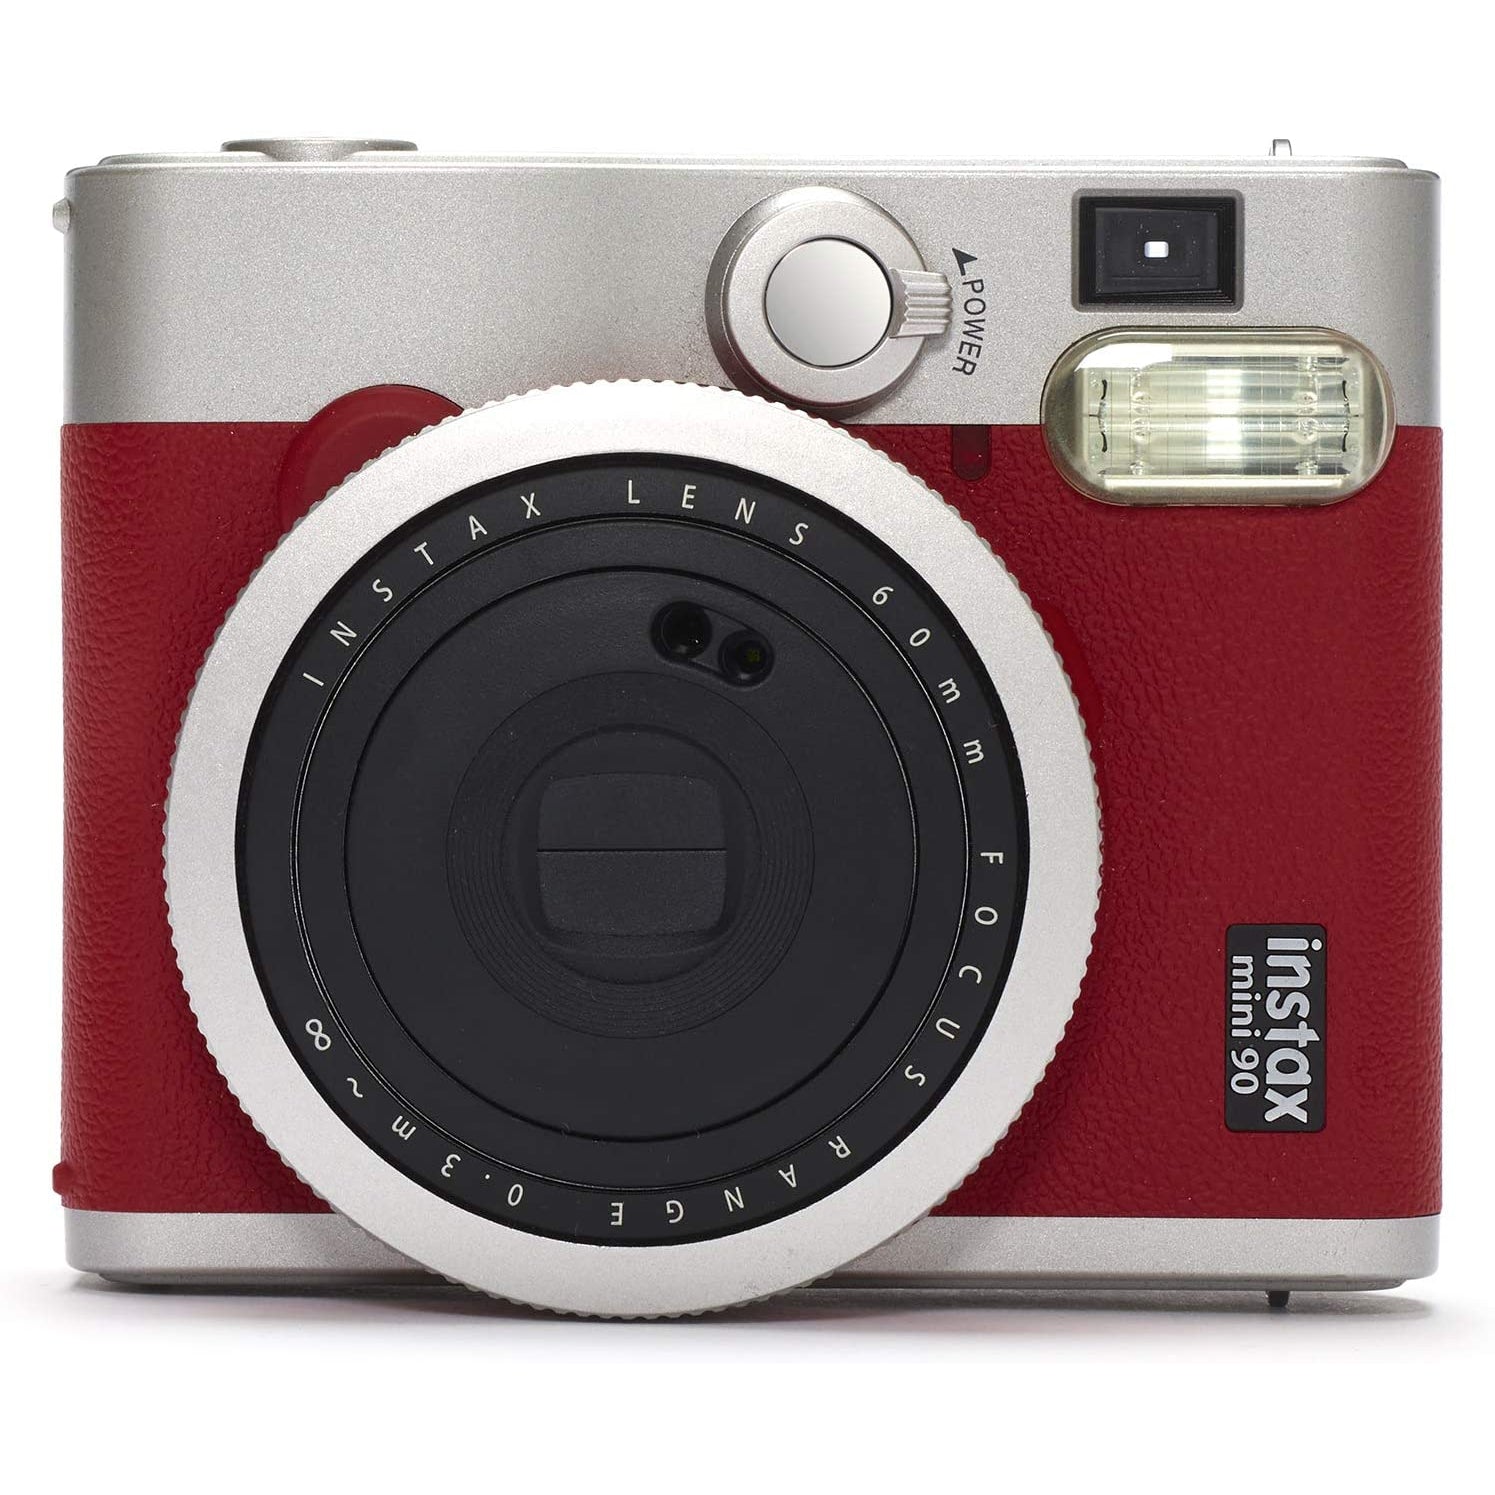 Fujifilm Instax Mini 90 Pro Red Camera Bundle